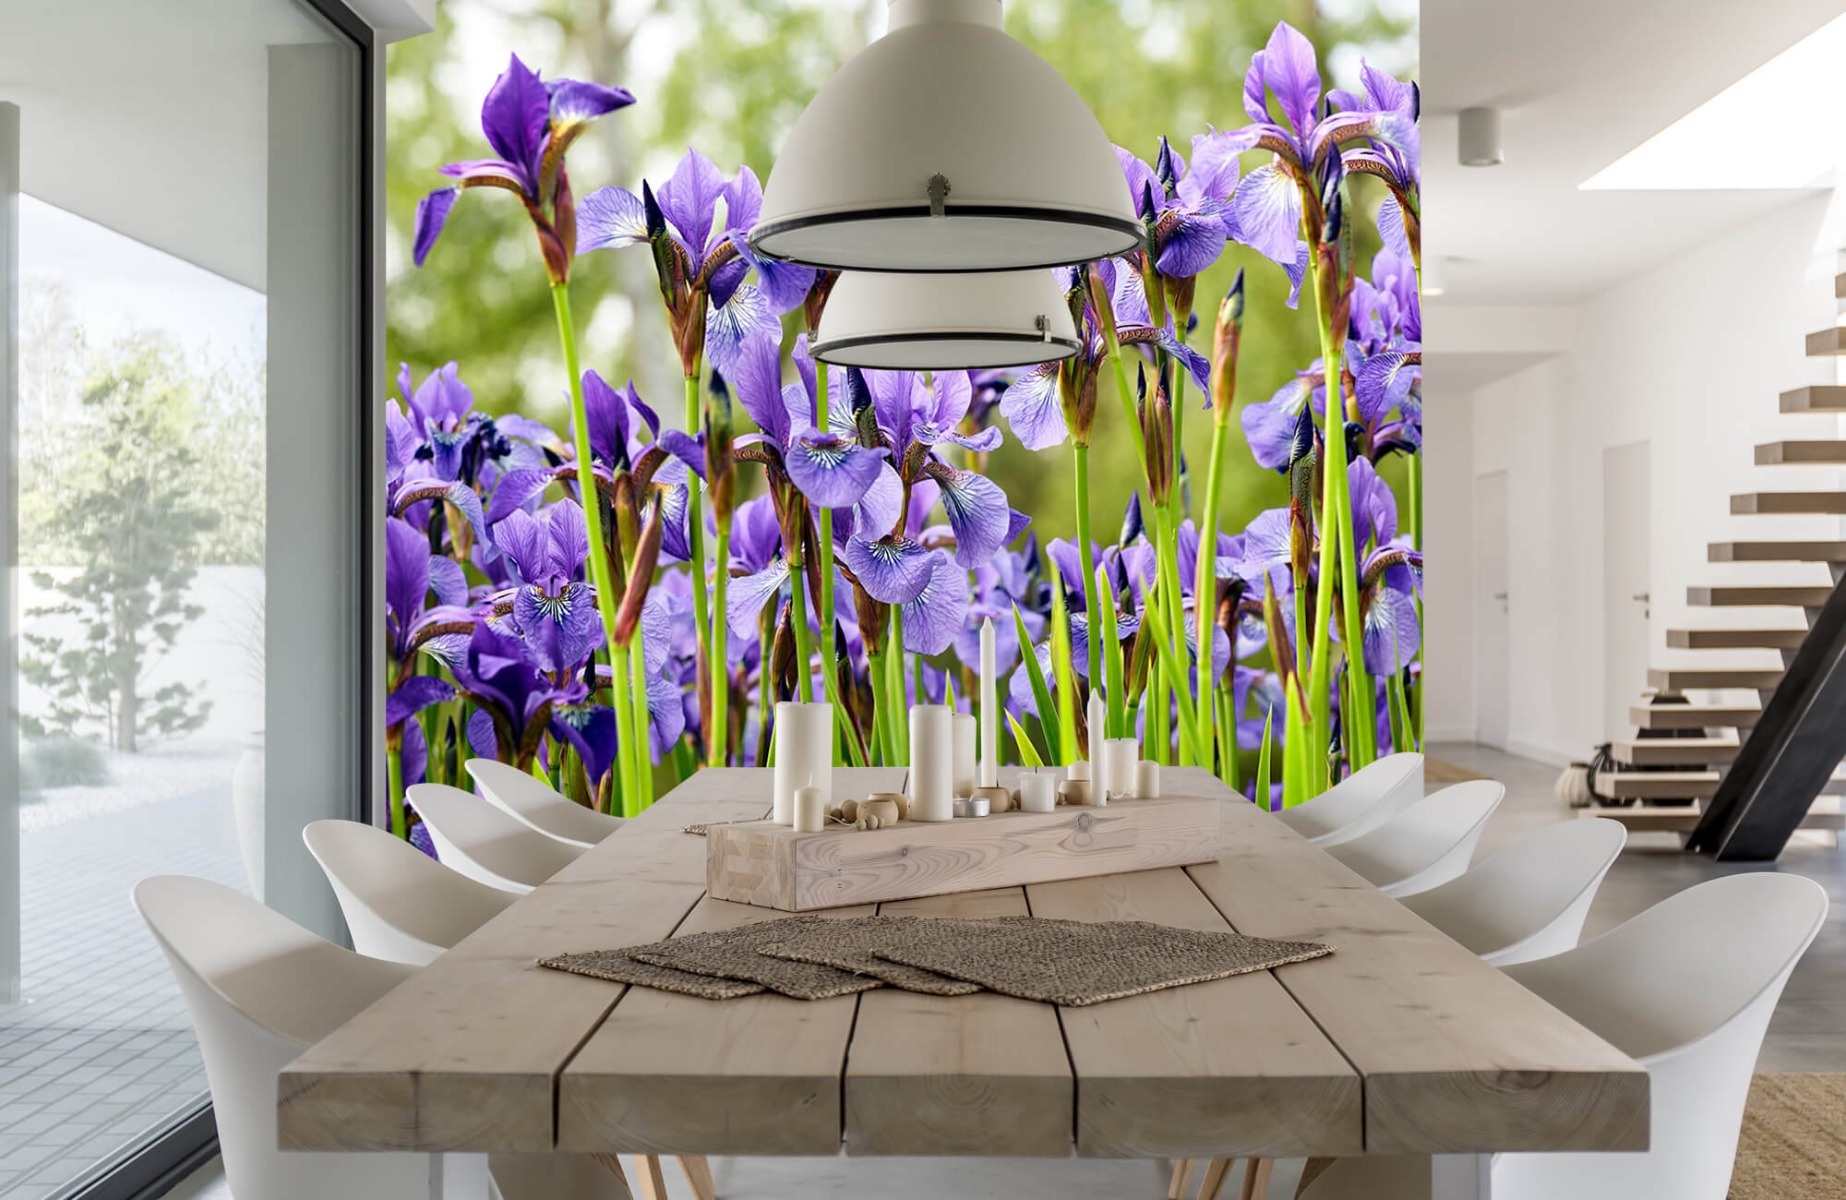 Flower fields - Irises  - Bedroom 2